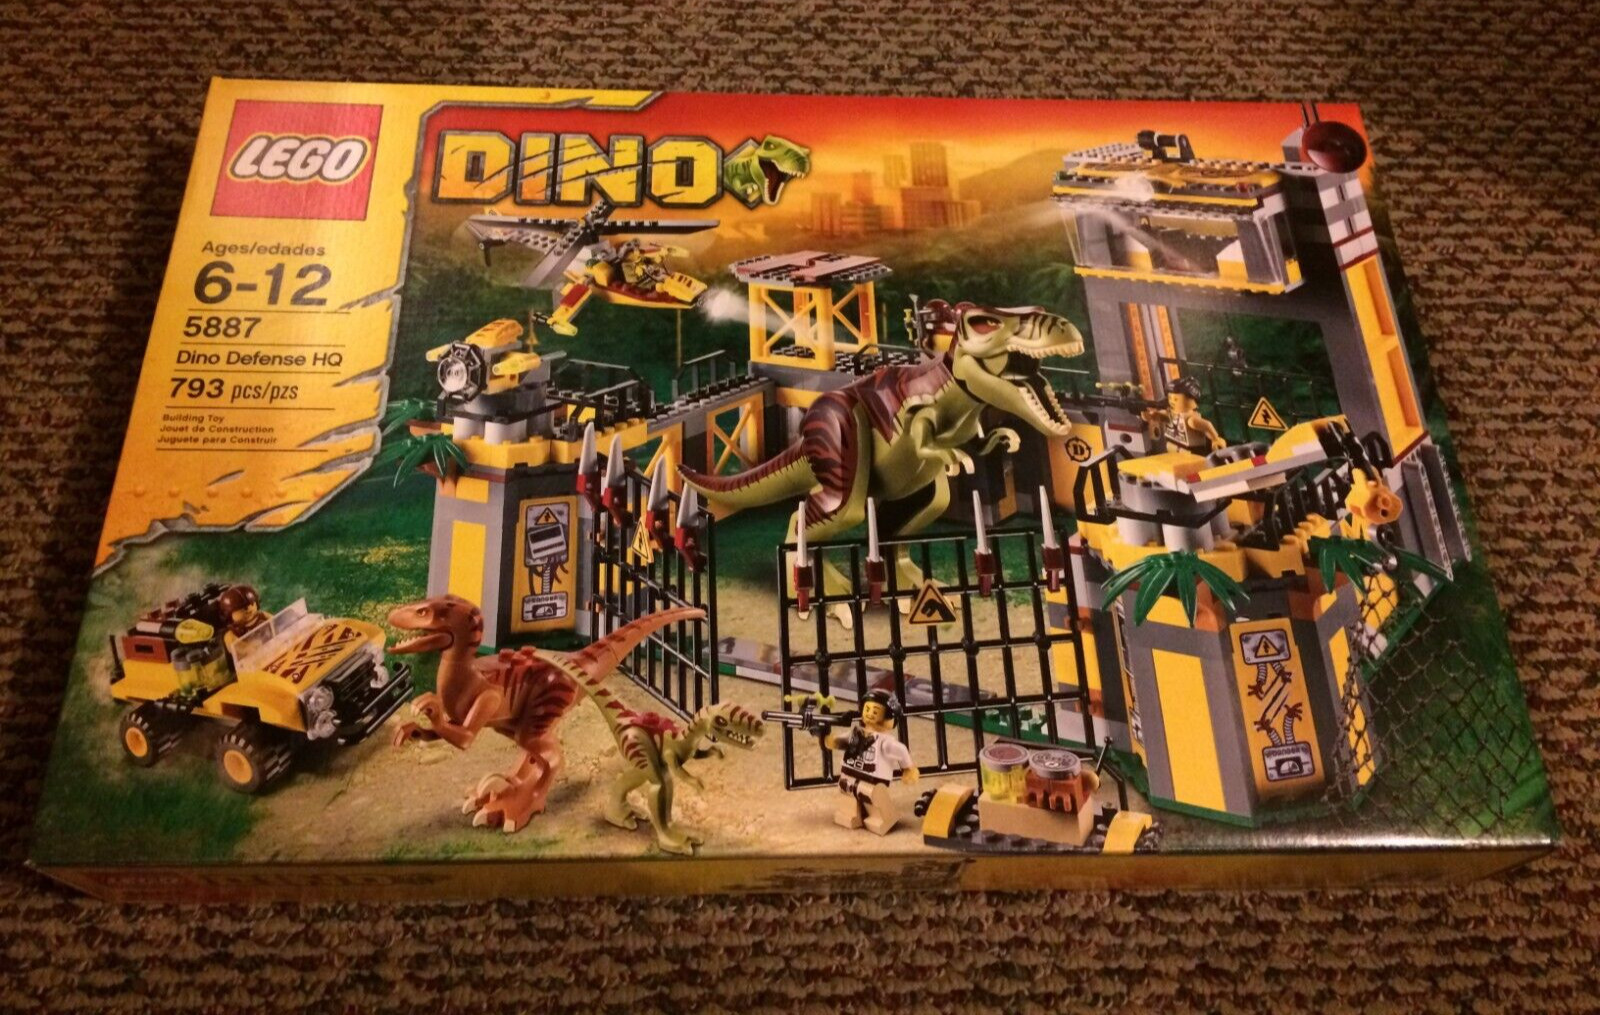 LEGO 5887 Dino Defense HQ - BRAND NEW SEALED